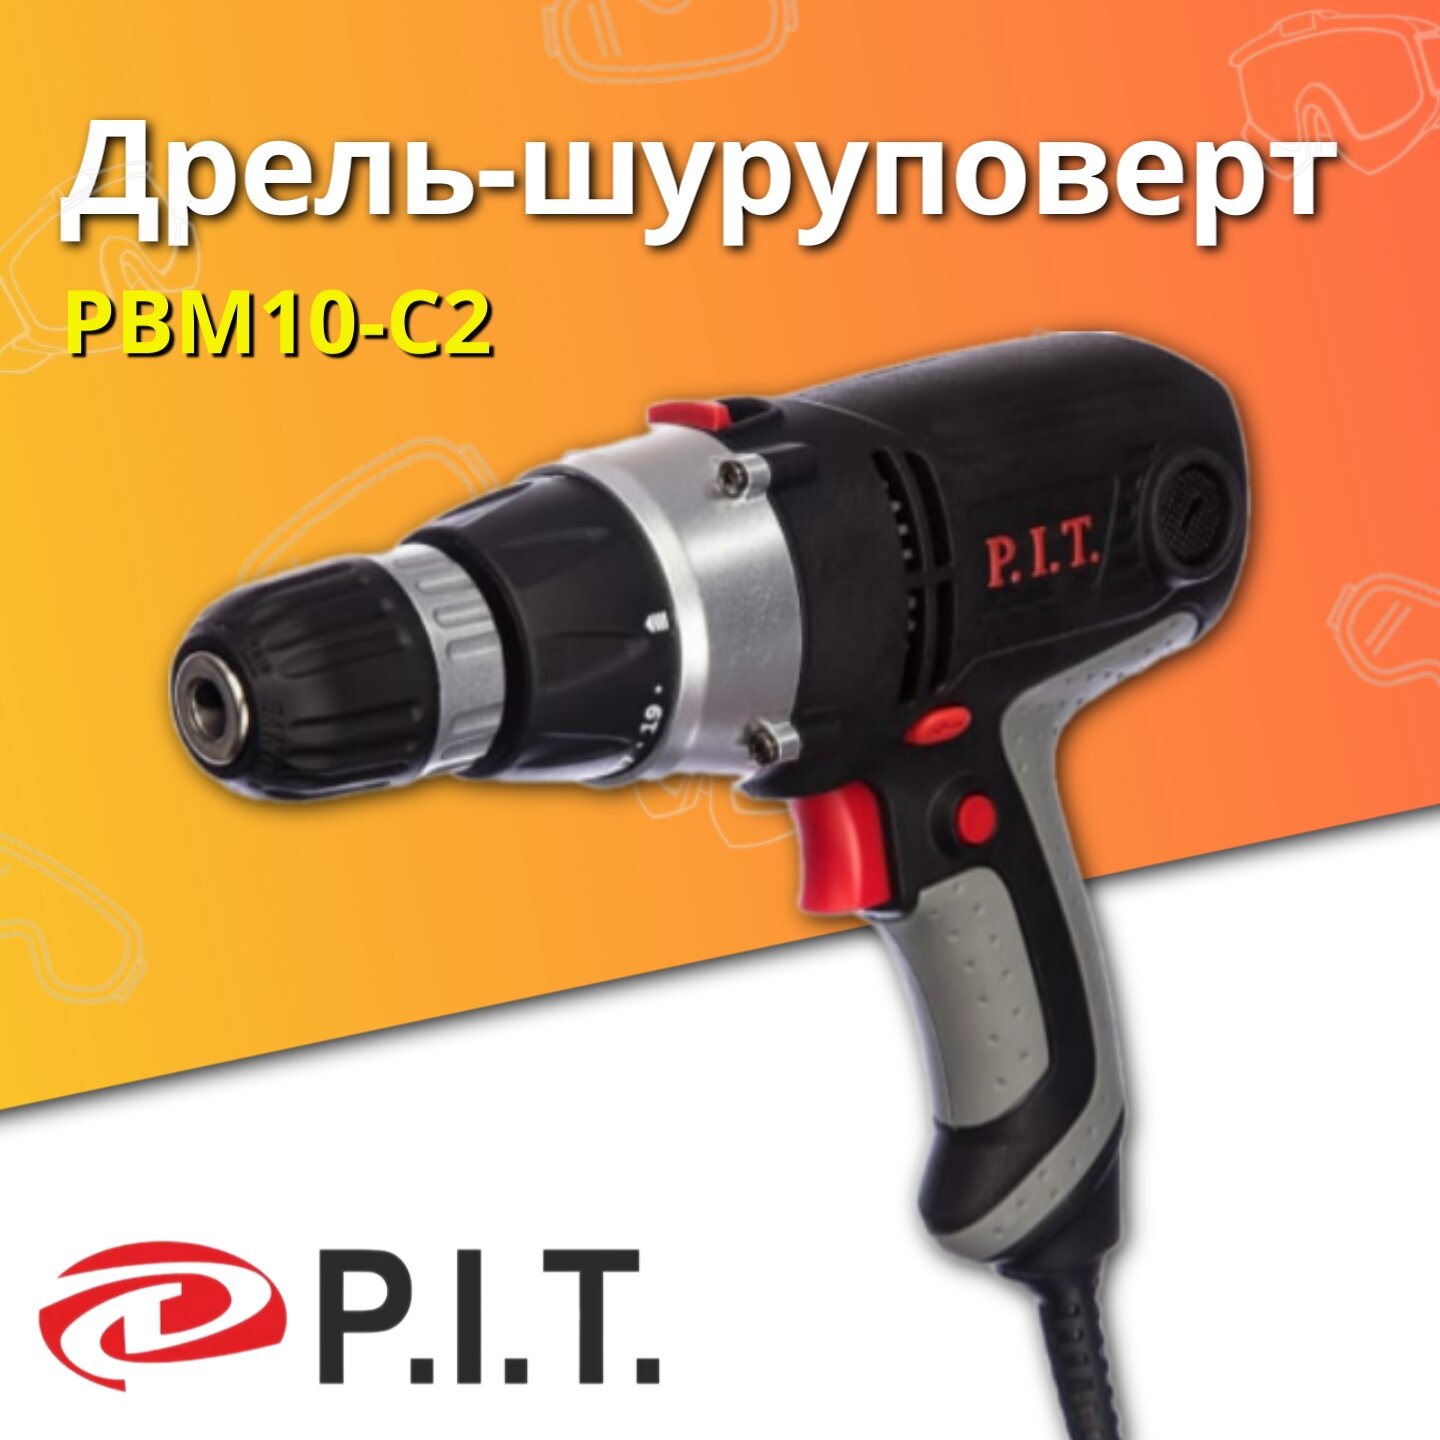 Дрель-шуруповерт P.I.T. PBM10-С2, 400 Вт, без аккумулятора